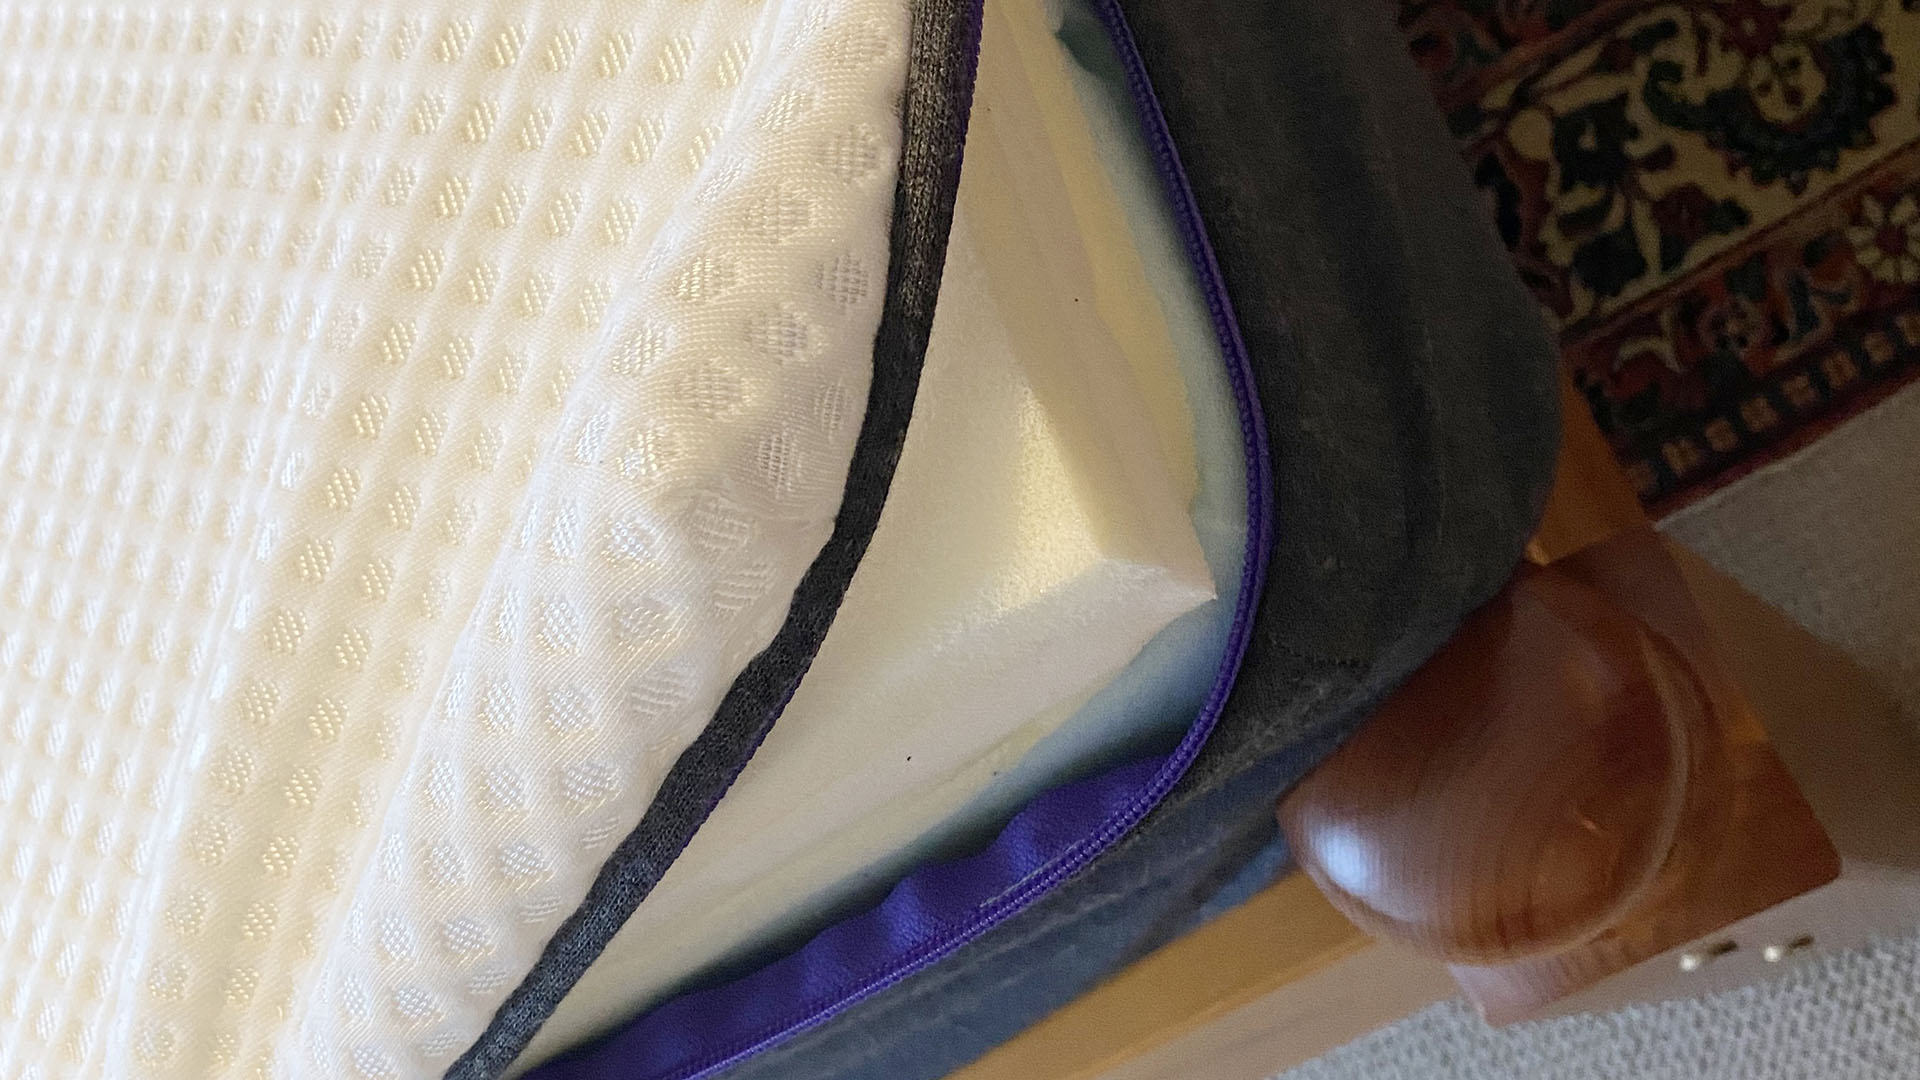 Nectar Premier Hybrid mattress unzipped to show foams inside